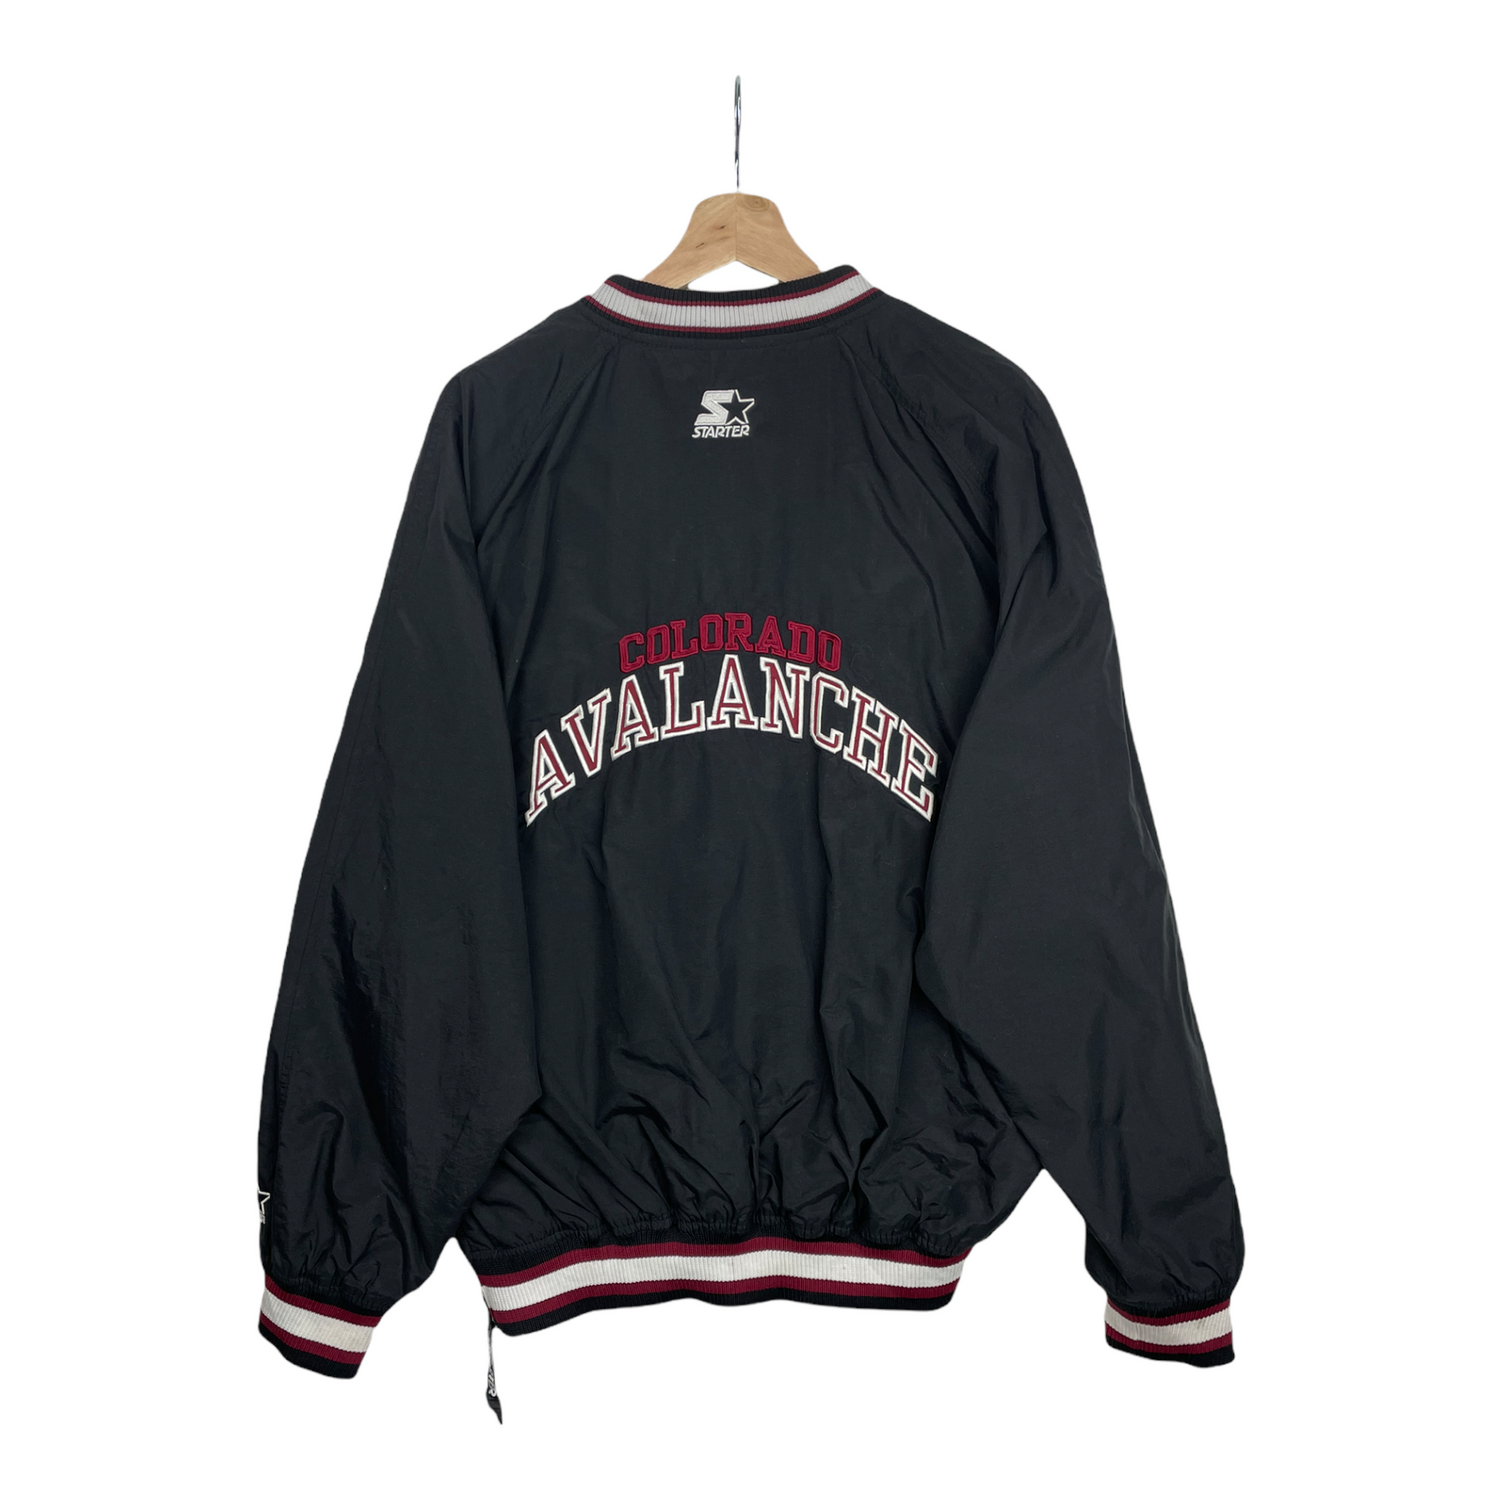 Vintage Colorado Avalanche Starter NHL Shirt Unisex Size Medium MADE IN USA